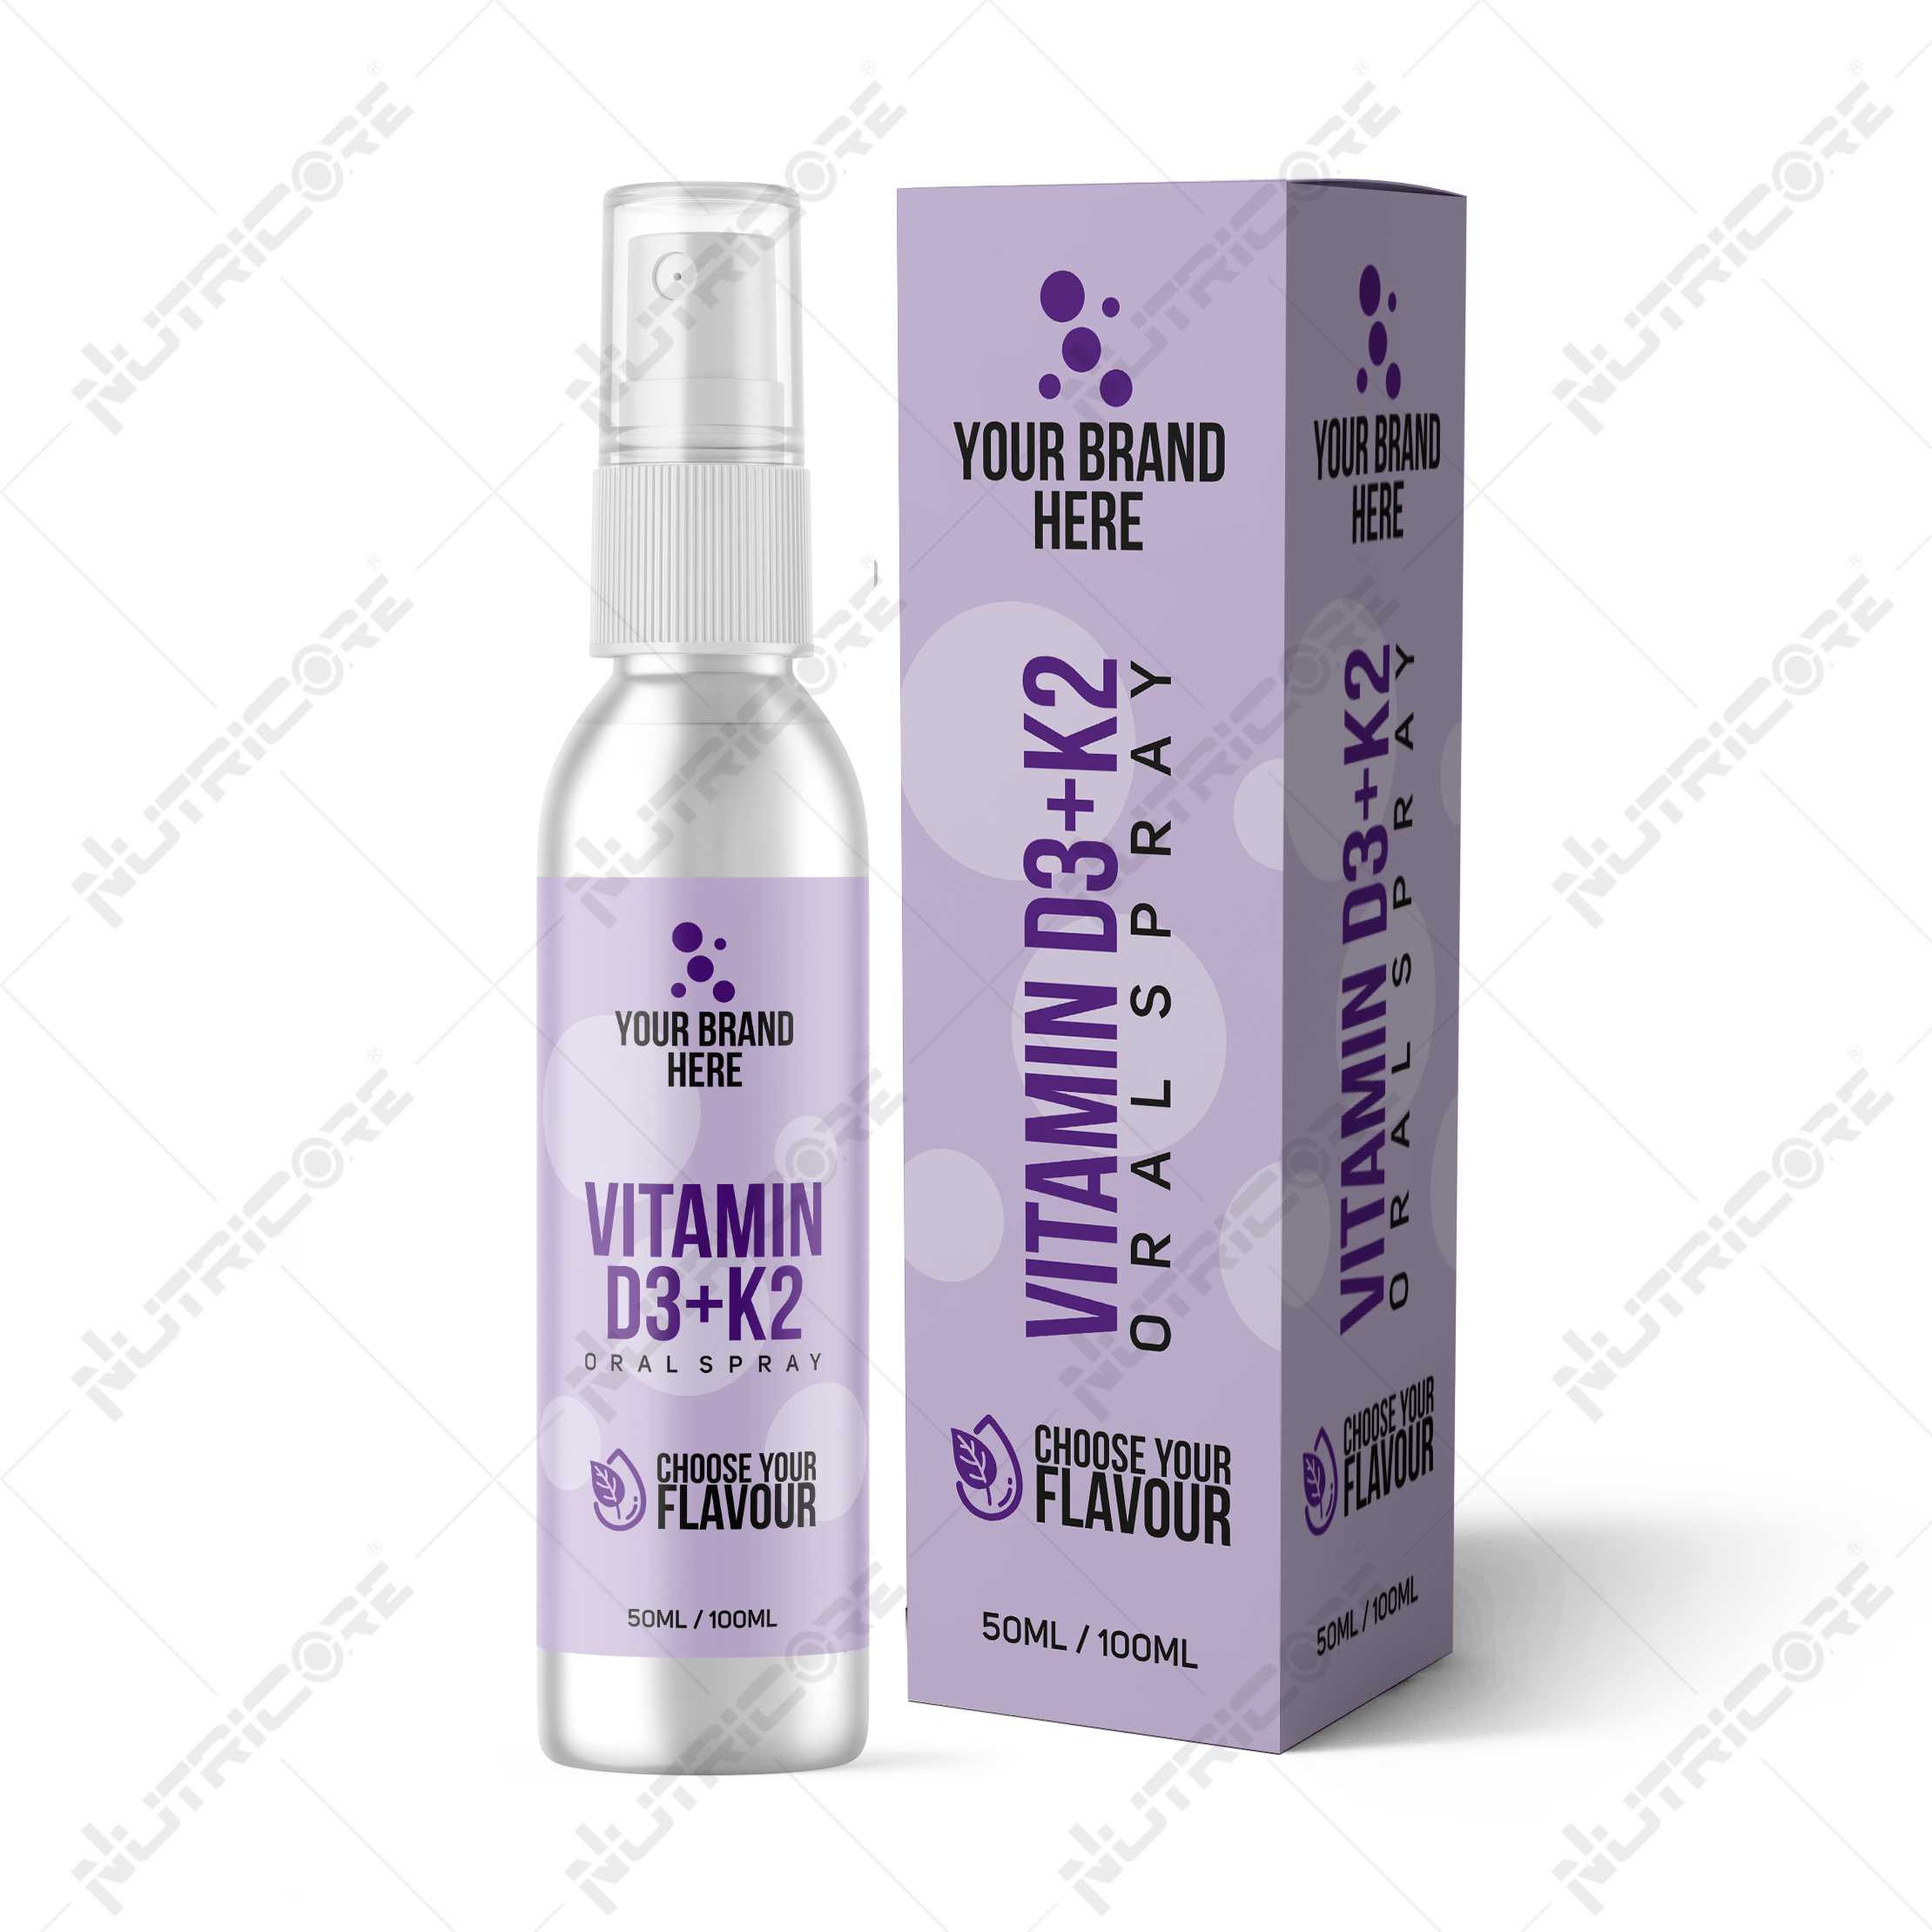 Vitamin D3+K2 Spray